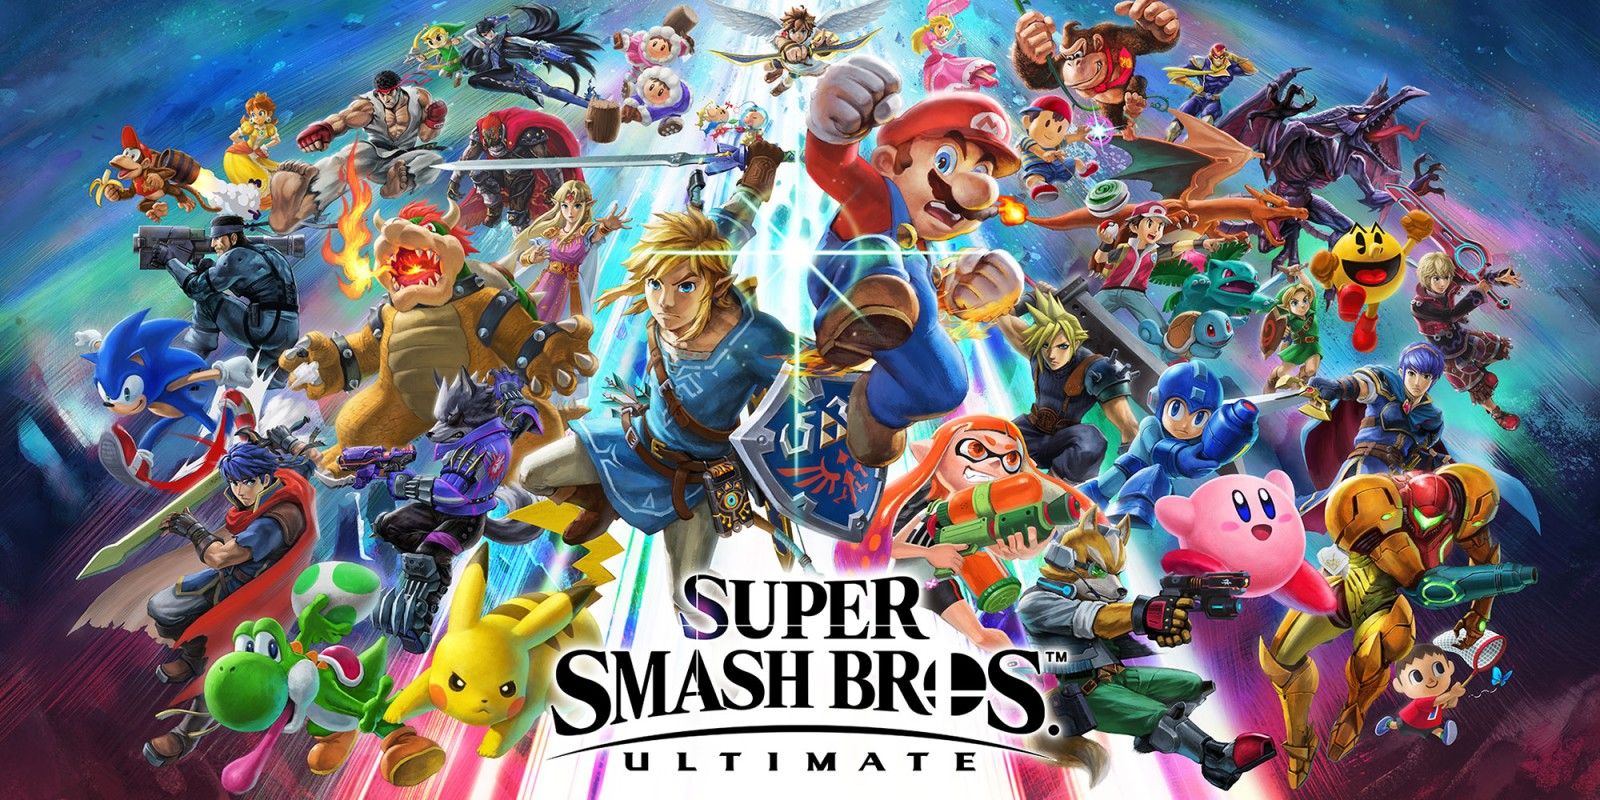 Super Smash Bros. Ultimate Cover Art Poster